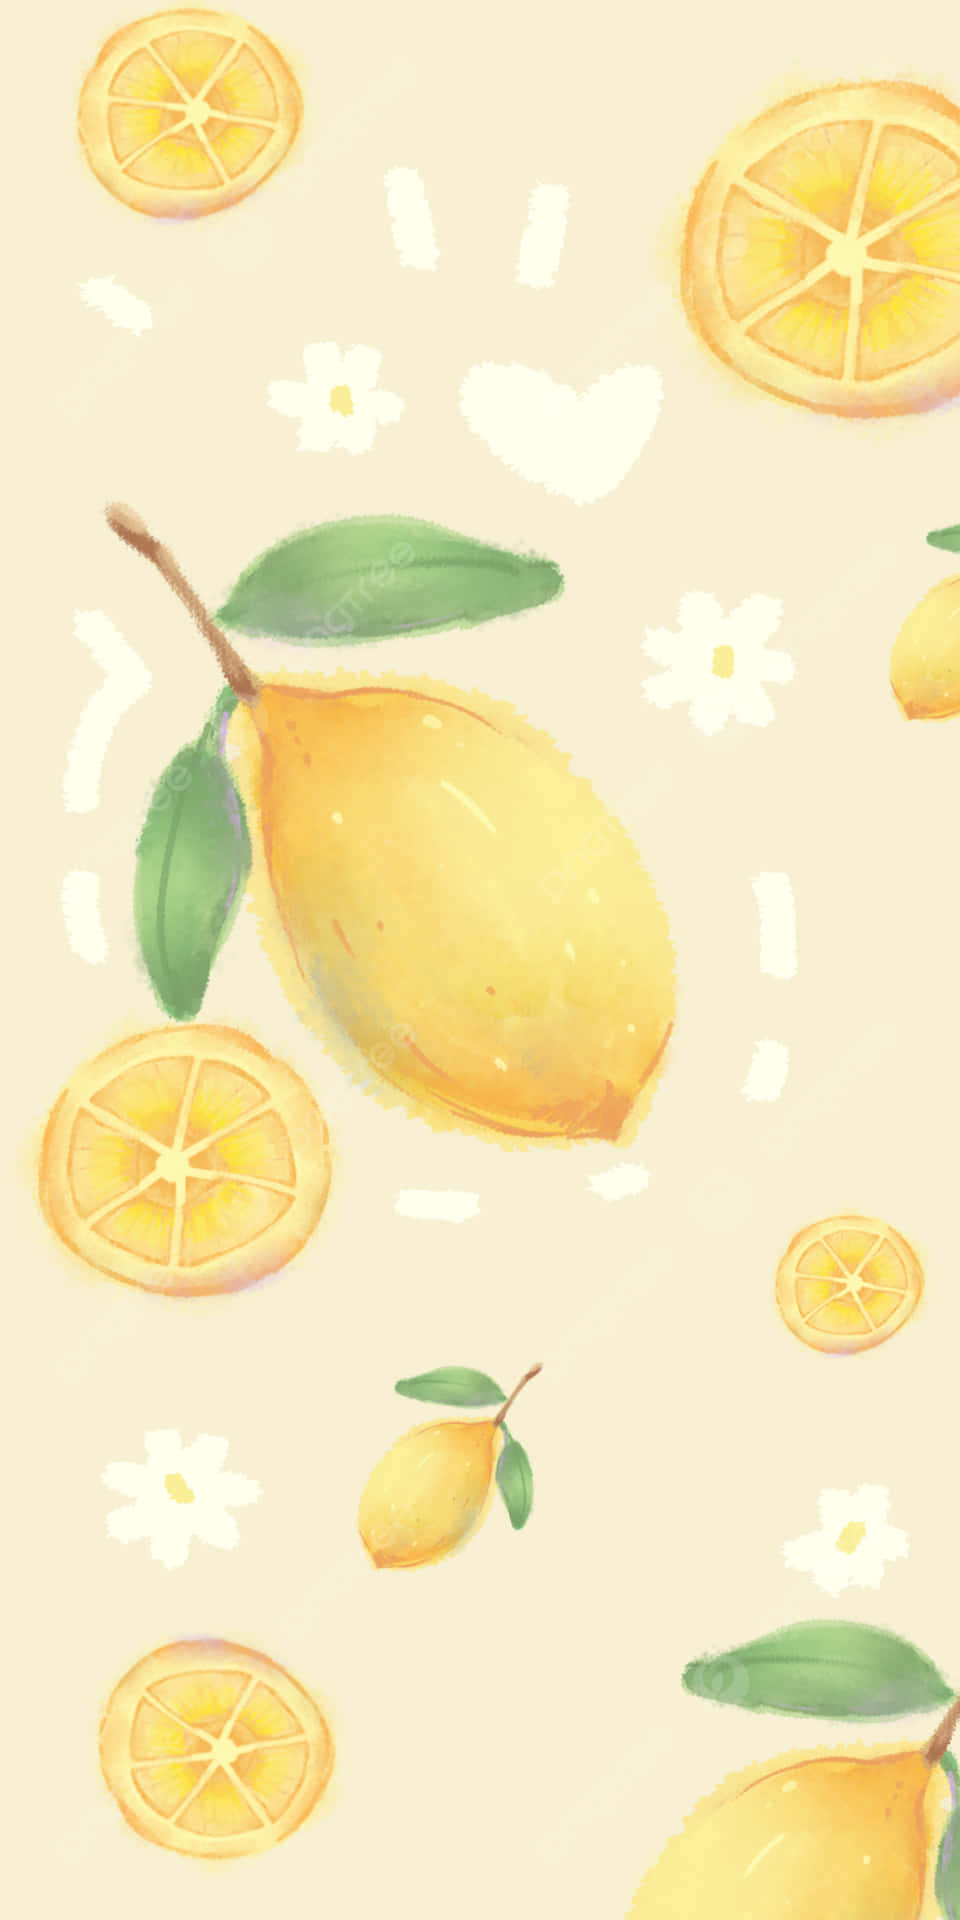 Caption: Vibrant Lemon Wallpaper